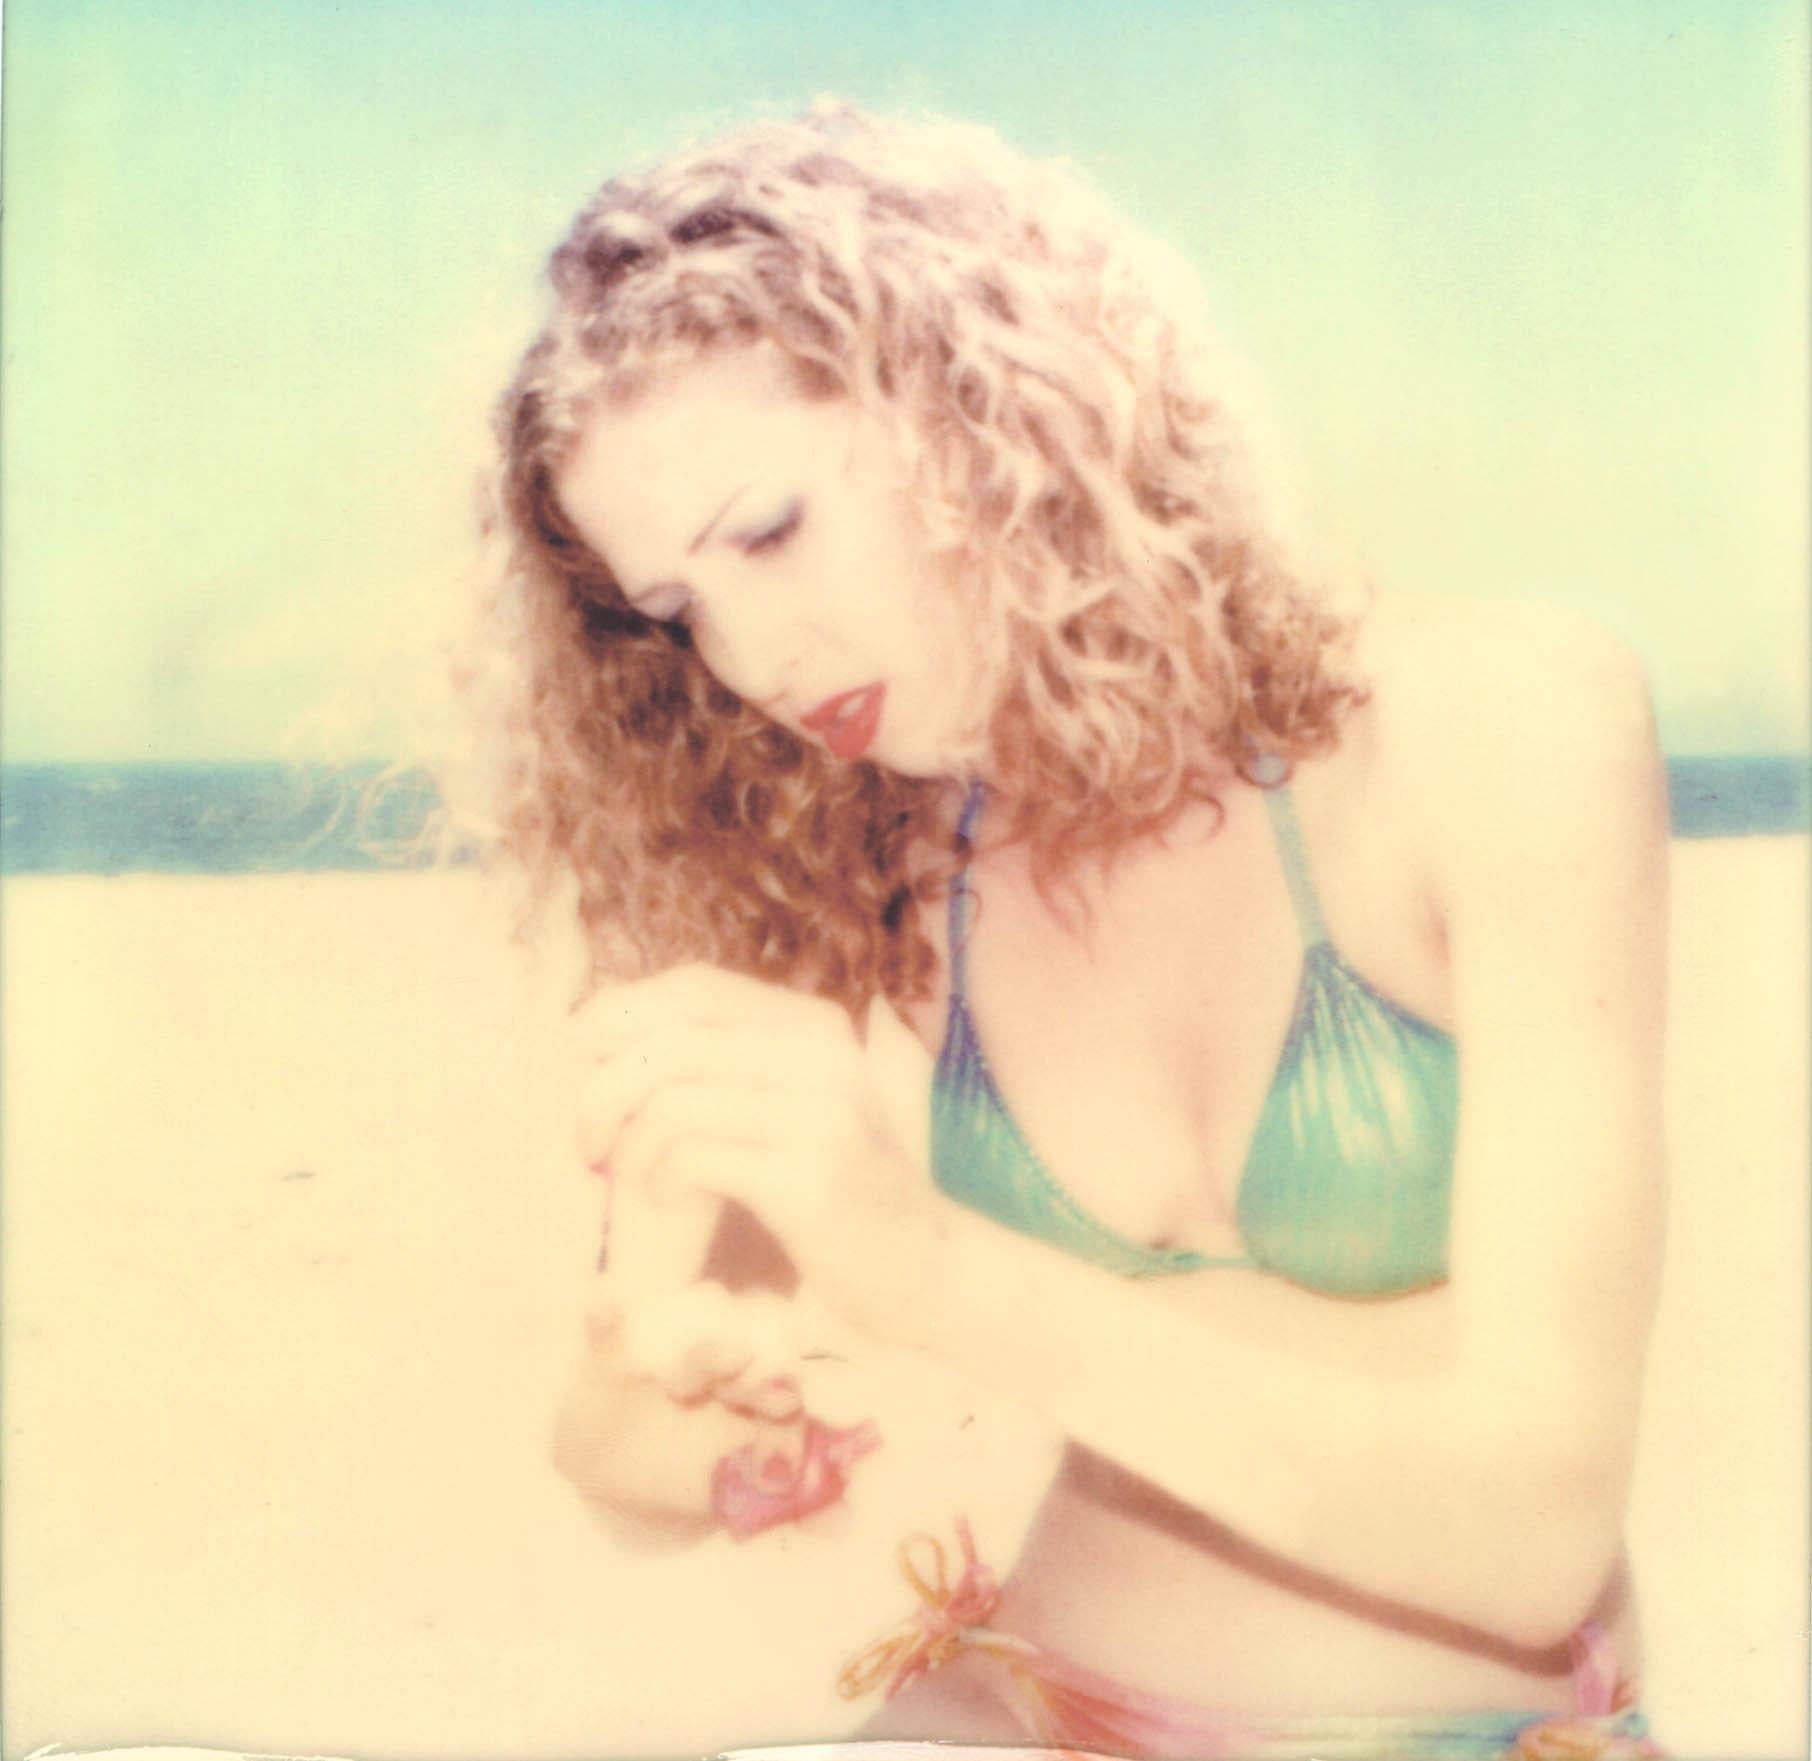 Kelly (Beachshoot) - analog, Polaroid, vintage hand-print, Contemporary, Women